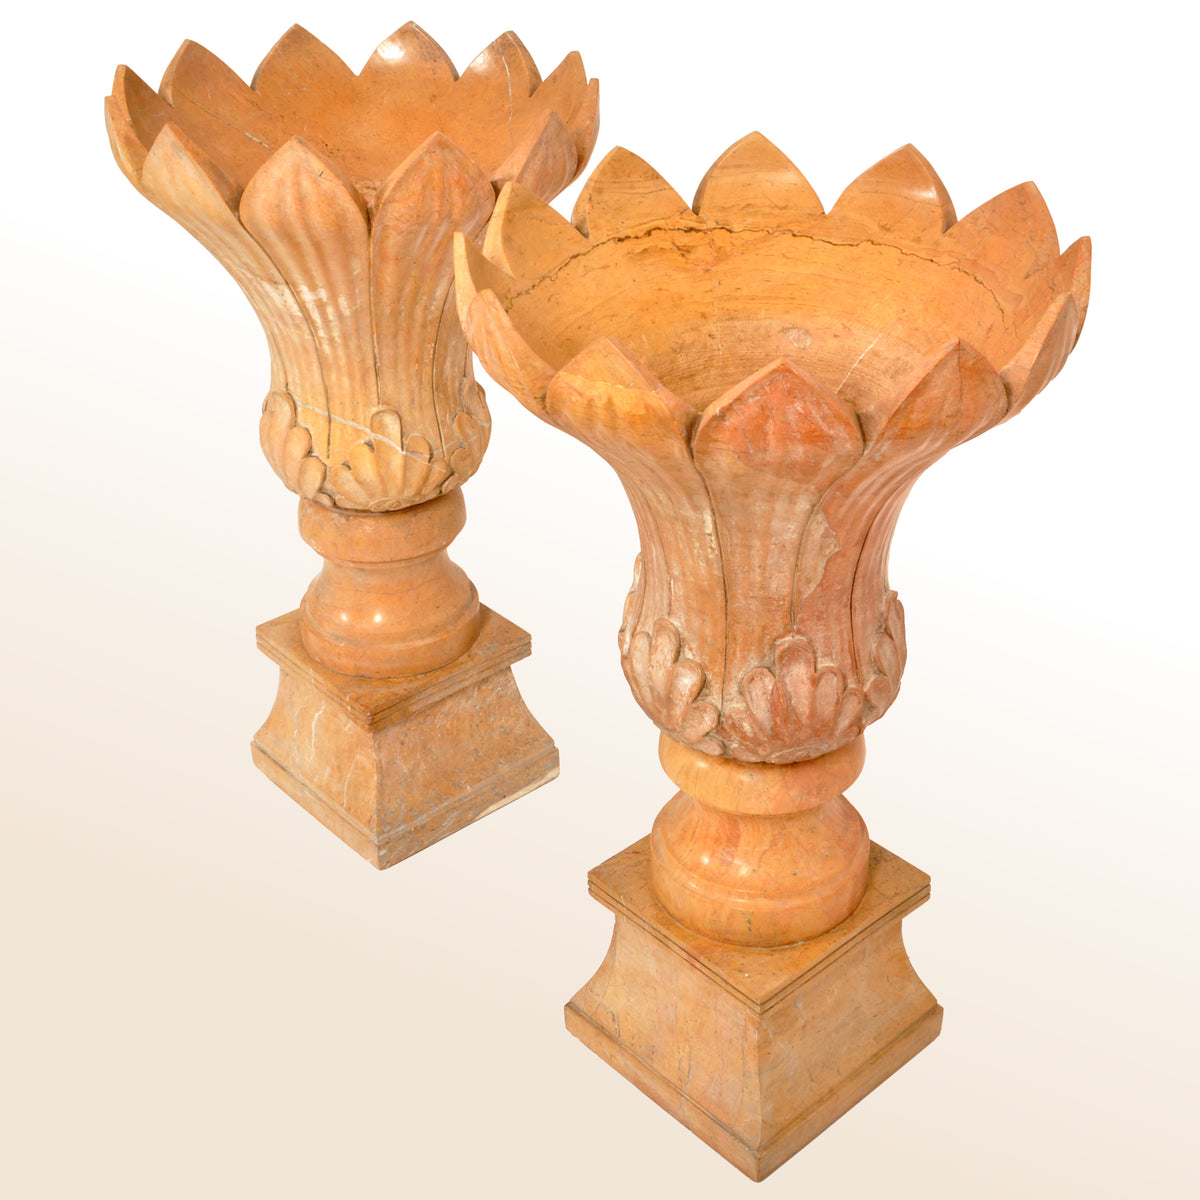 Monumental Pair of Antique 19th Century Italian Sienna Marble Urns / Planters circa 1830